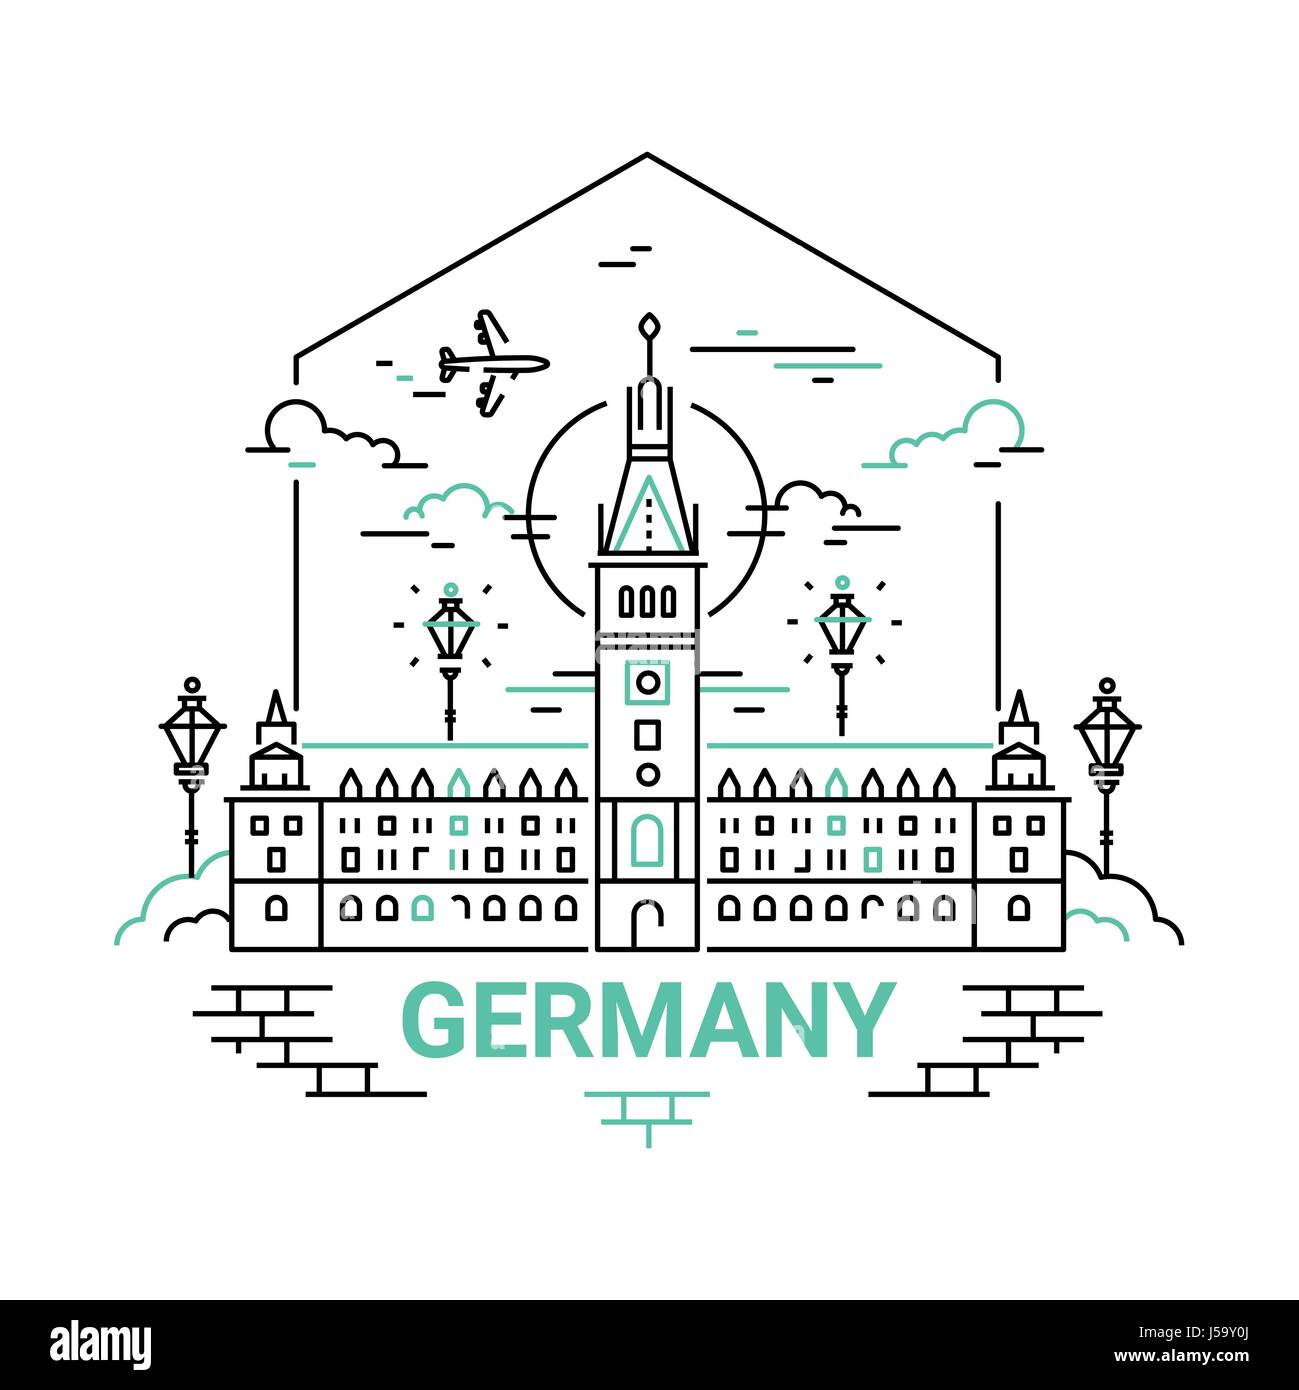 Allemagne - moderne ligne vectorielle illustration voyage Illustration de Vecteur